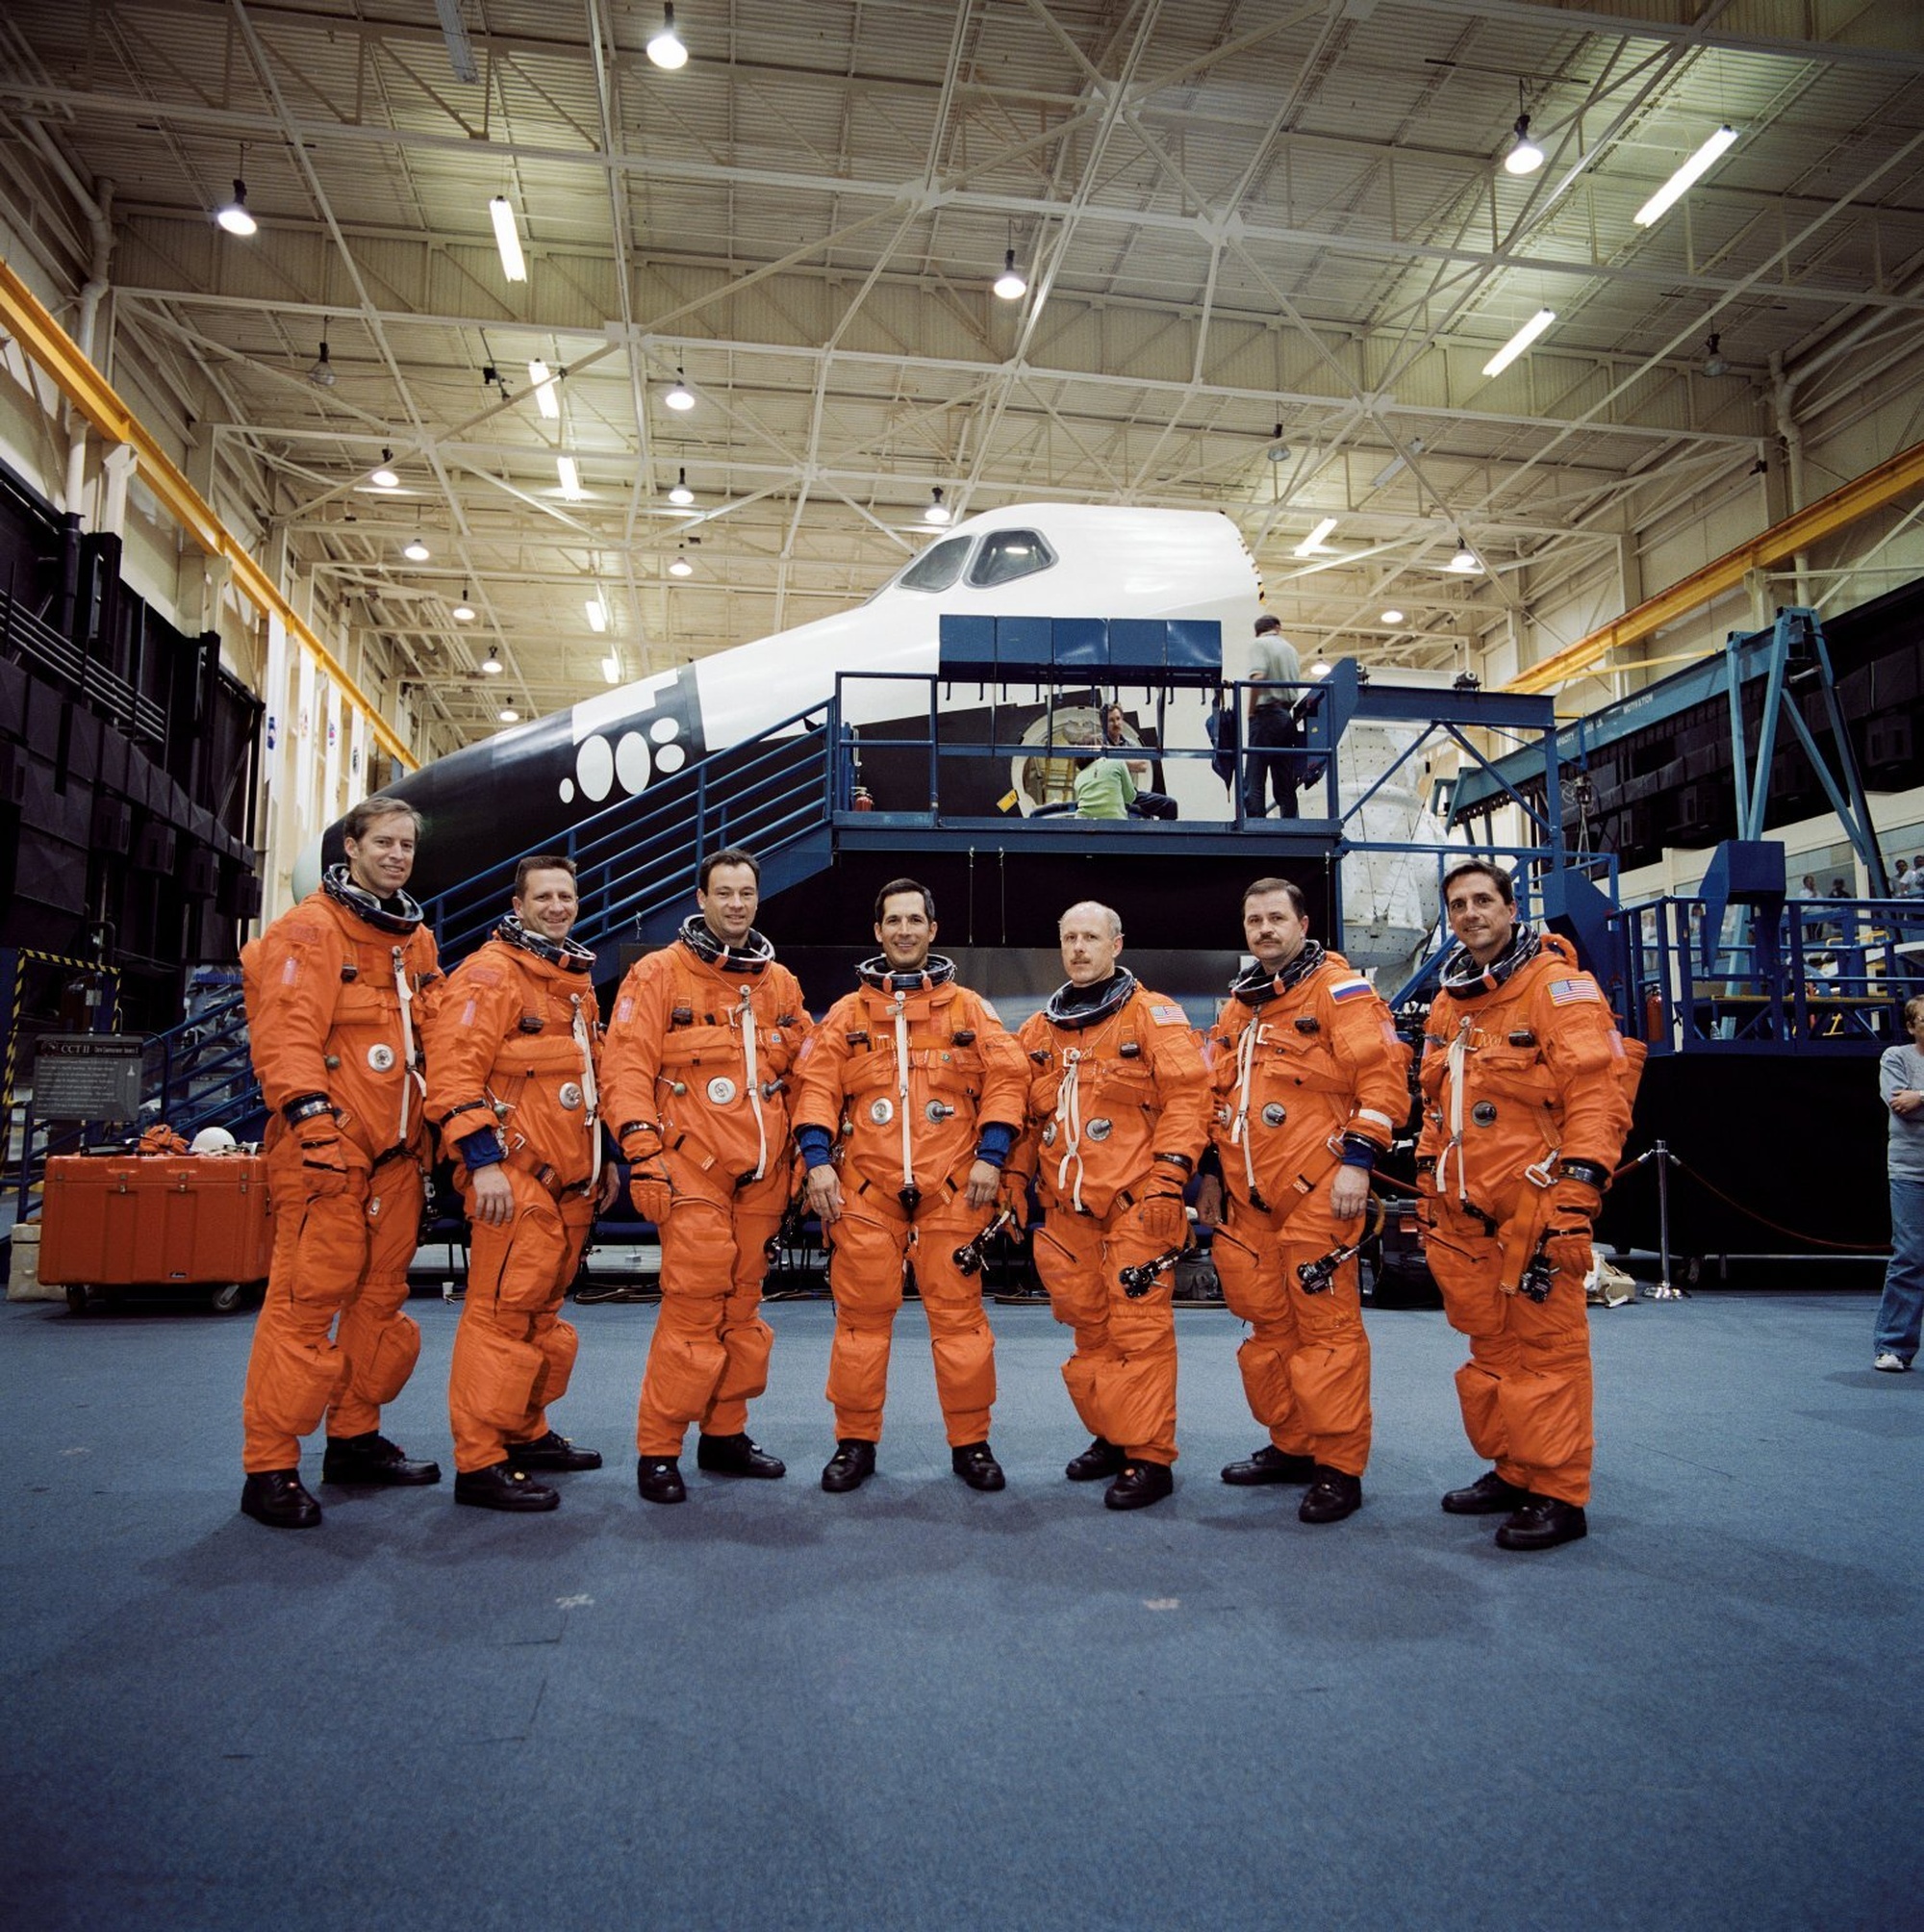 DVIDS - Images - Mission STS-113 Crew